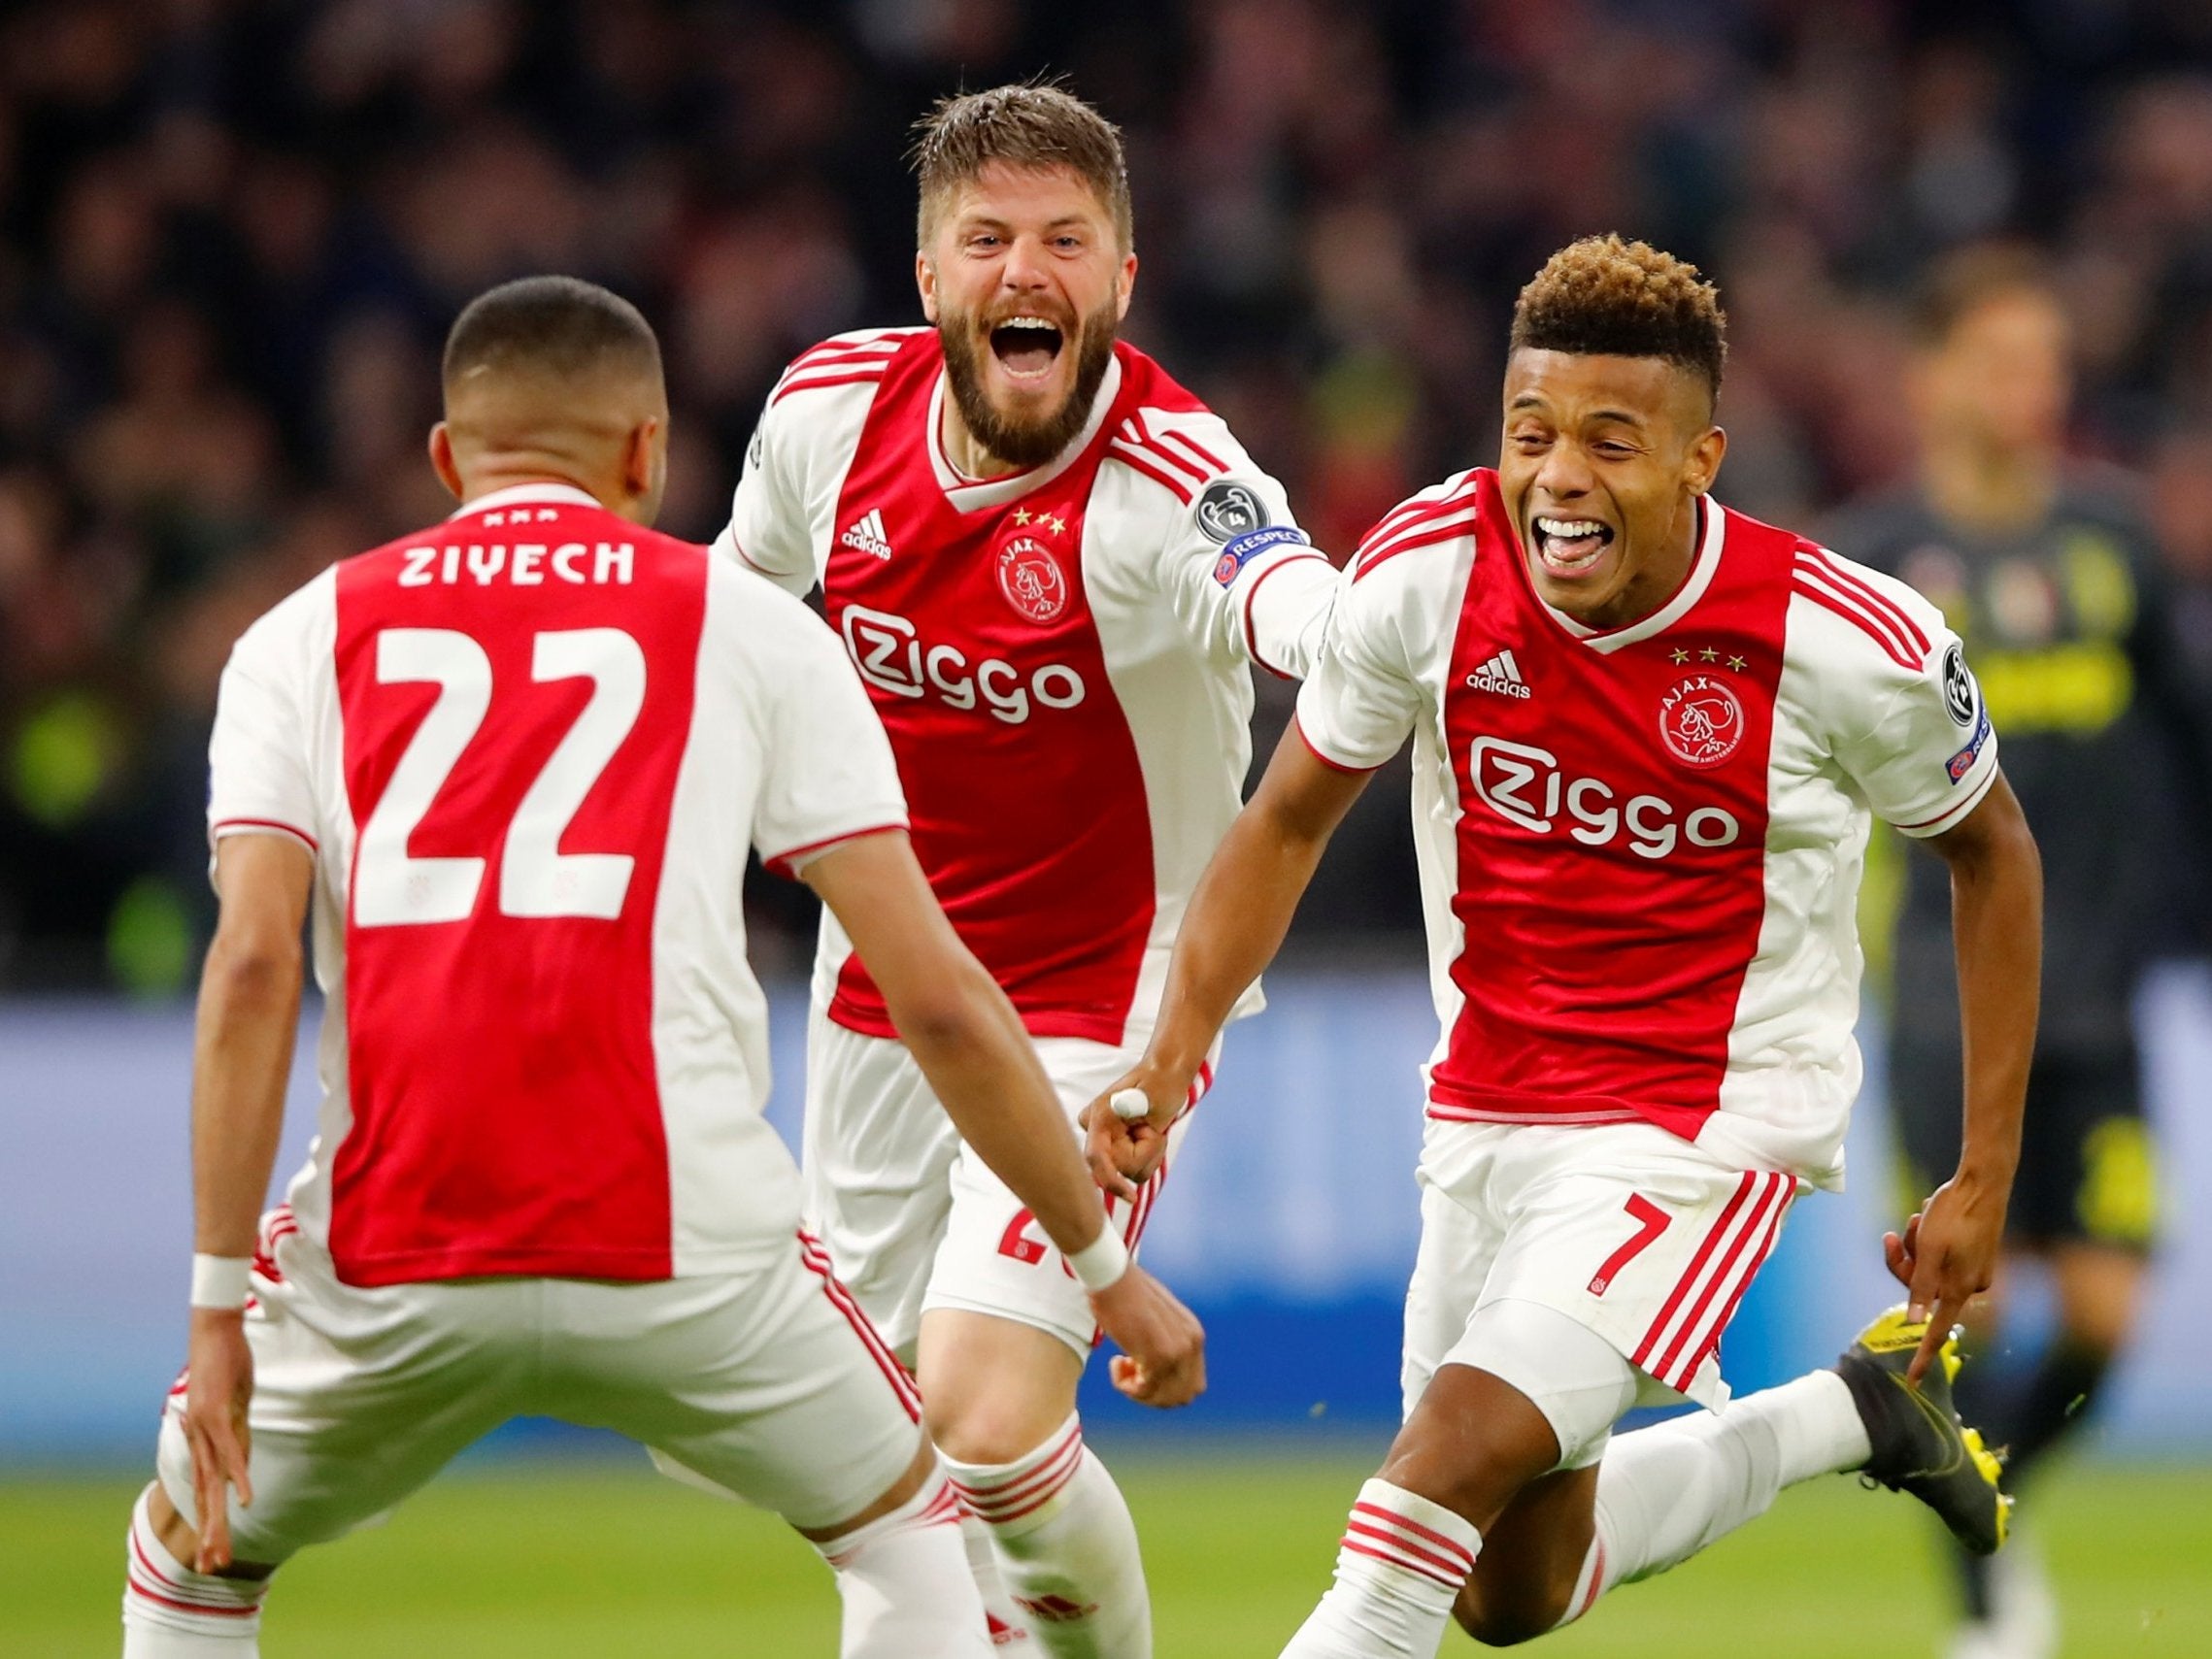 Ajax vs Juventus: Dominant Dutch cancel out Cristiano Ronaldo's opener to prove they are no fluke